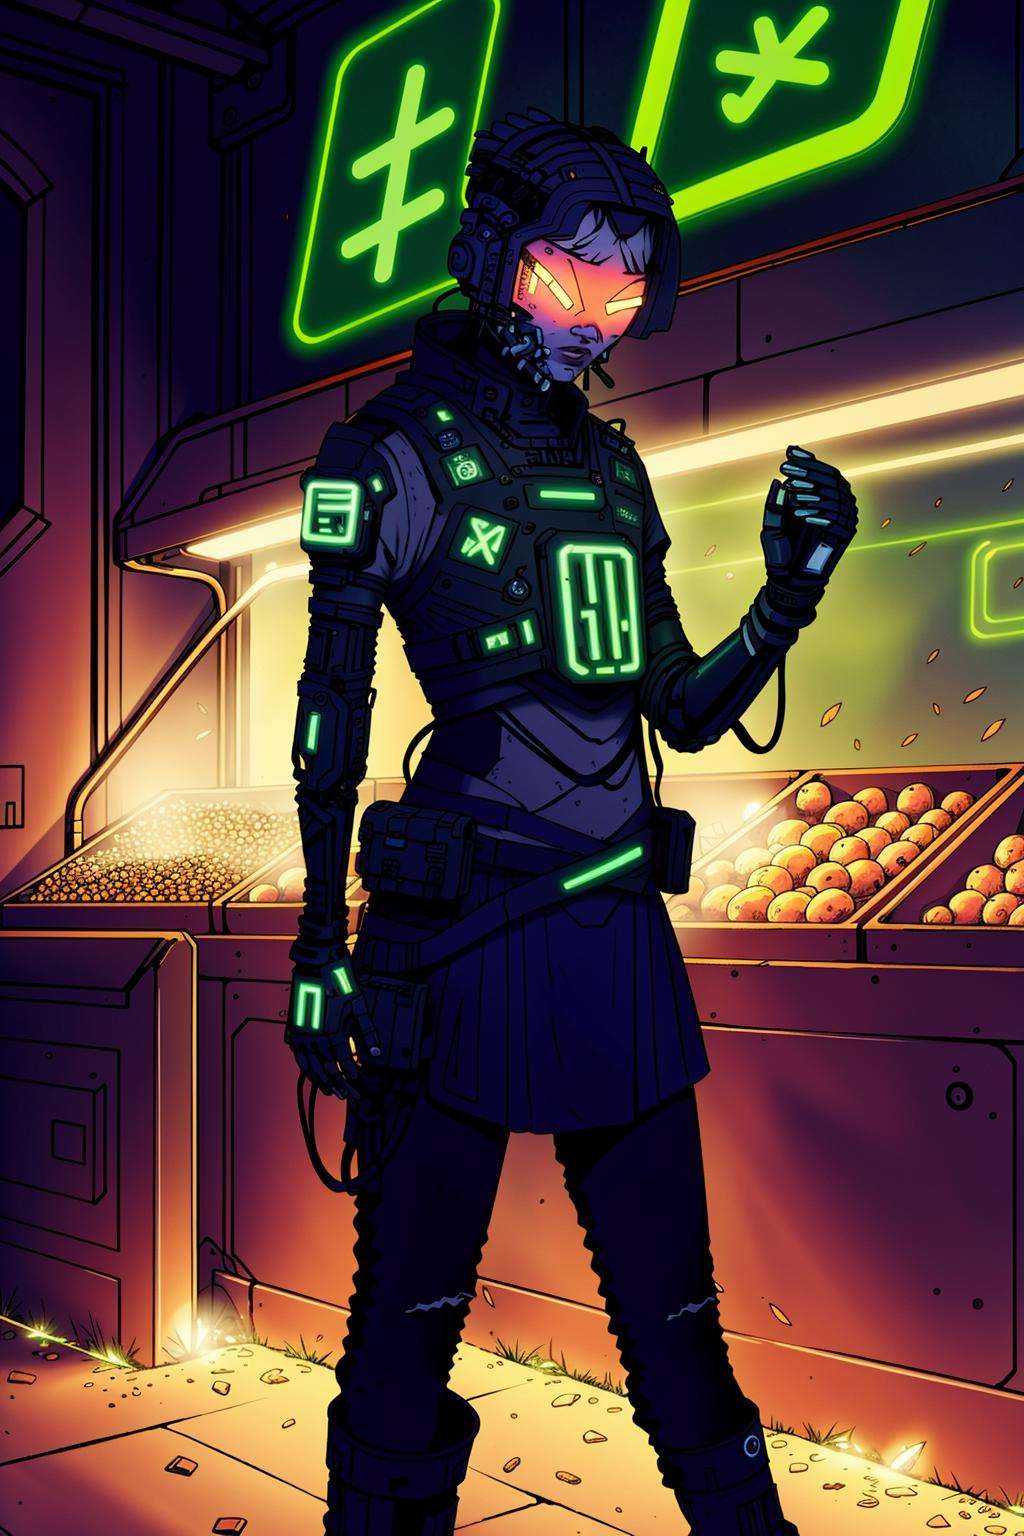 Subterranean market, merchants peddling bio-enhancements, their stalls illuminated by pulsating bioluminescent fungi. , Cyberpunk_Anime